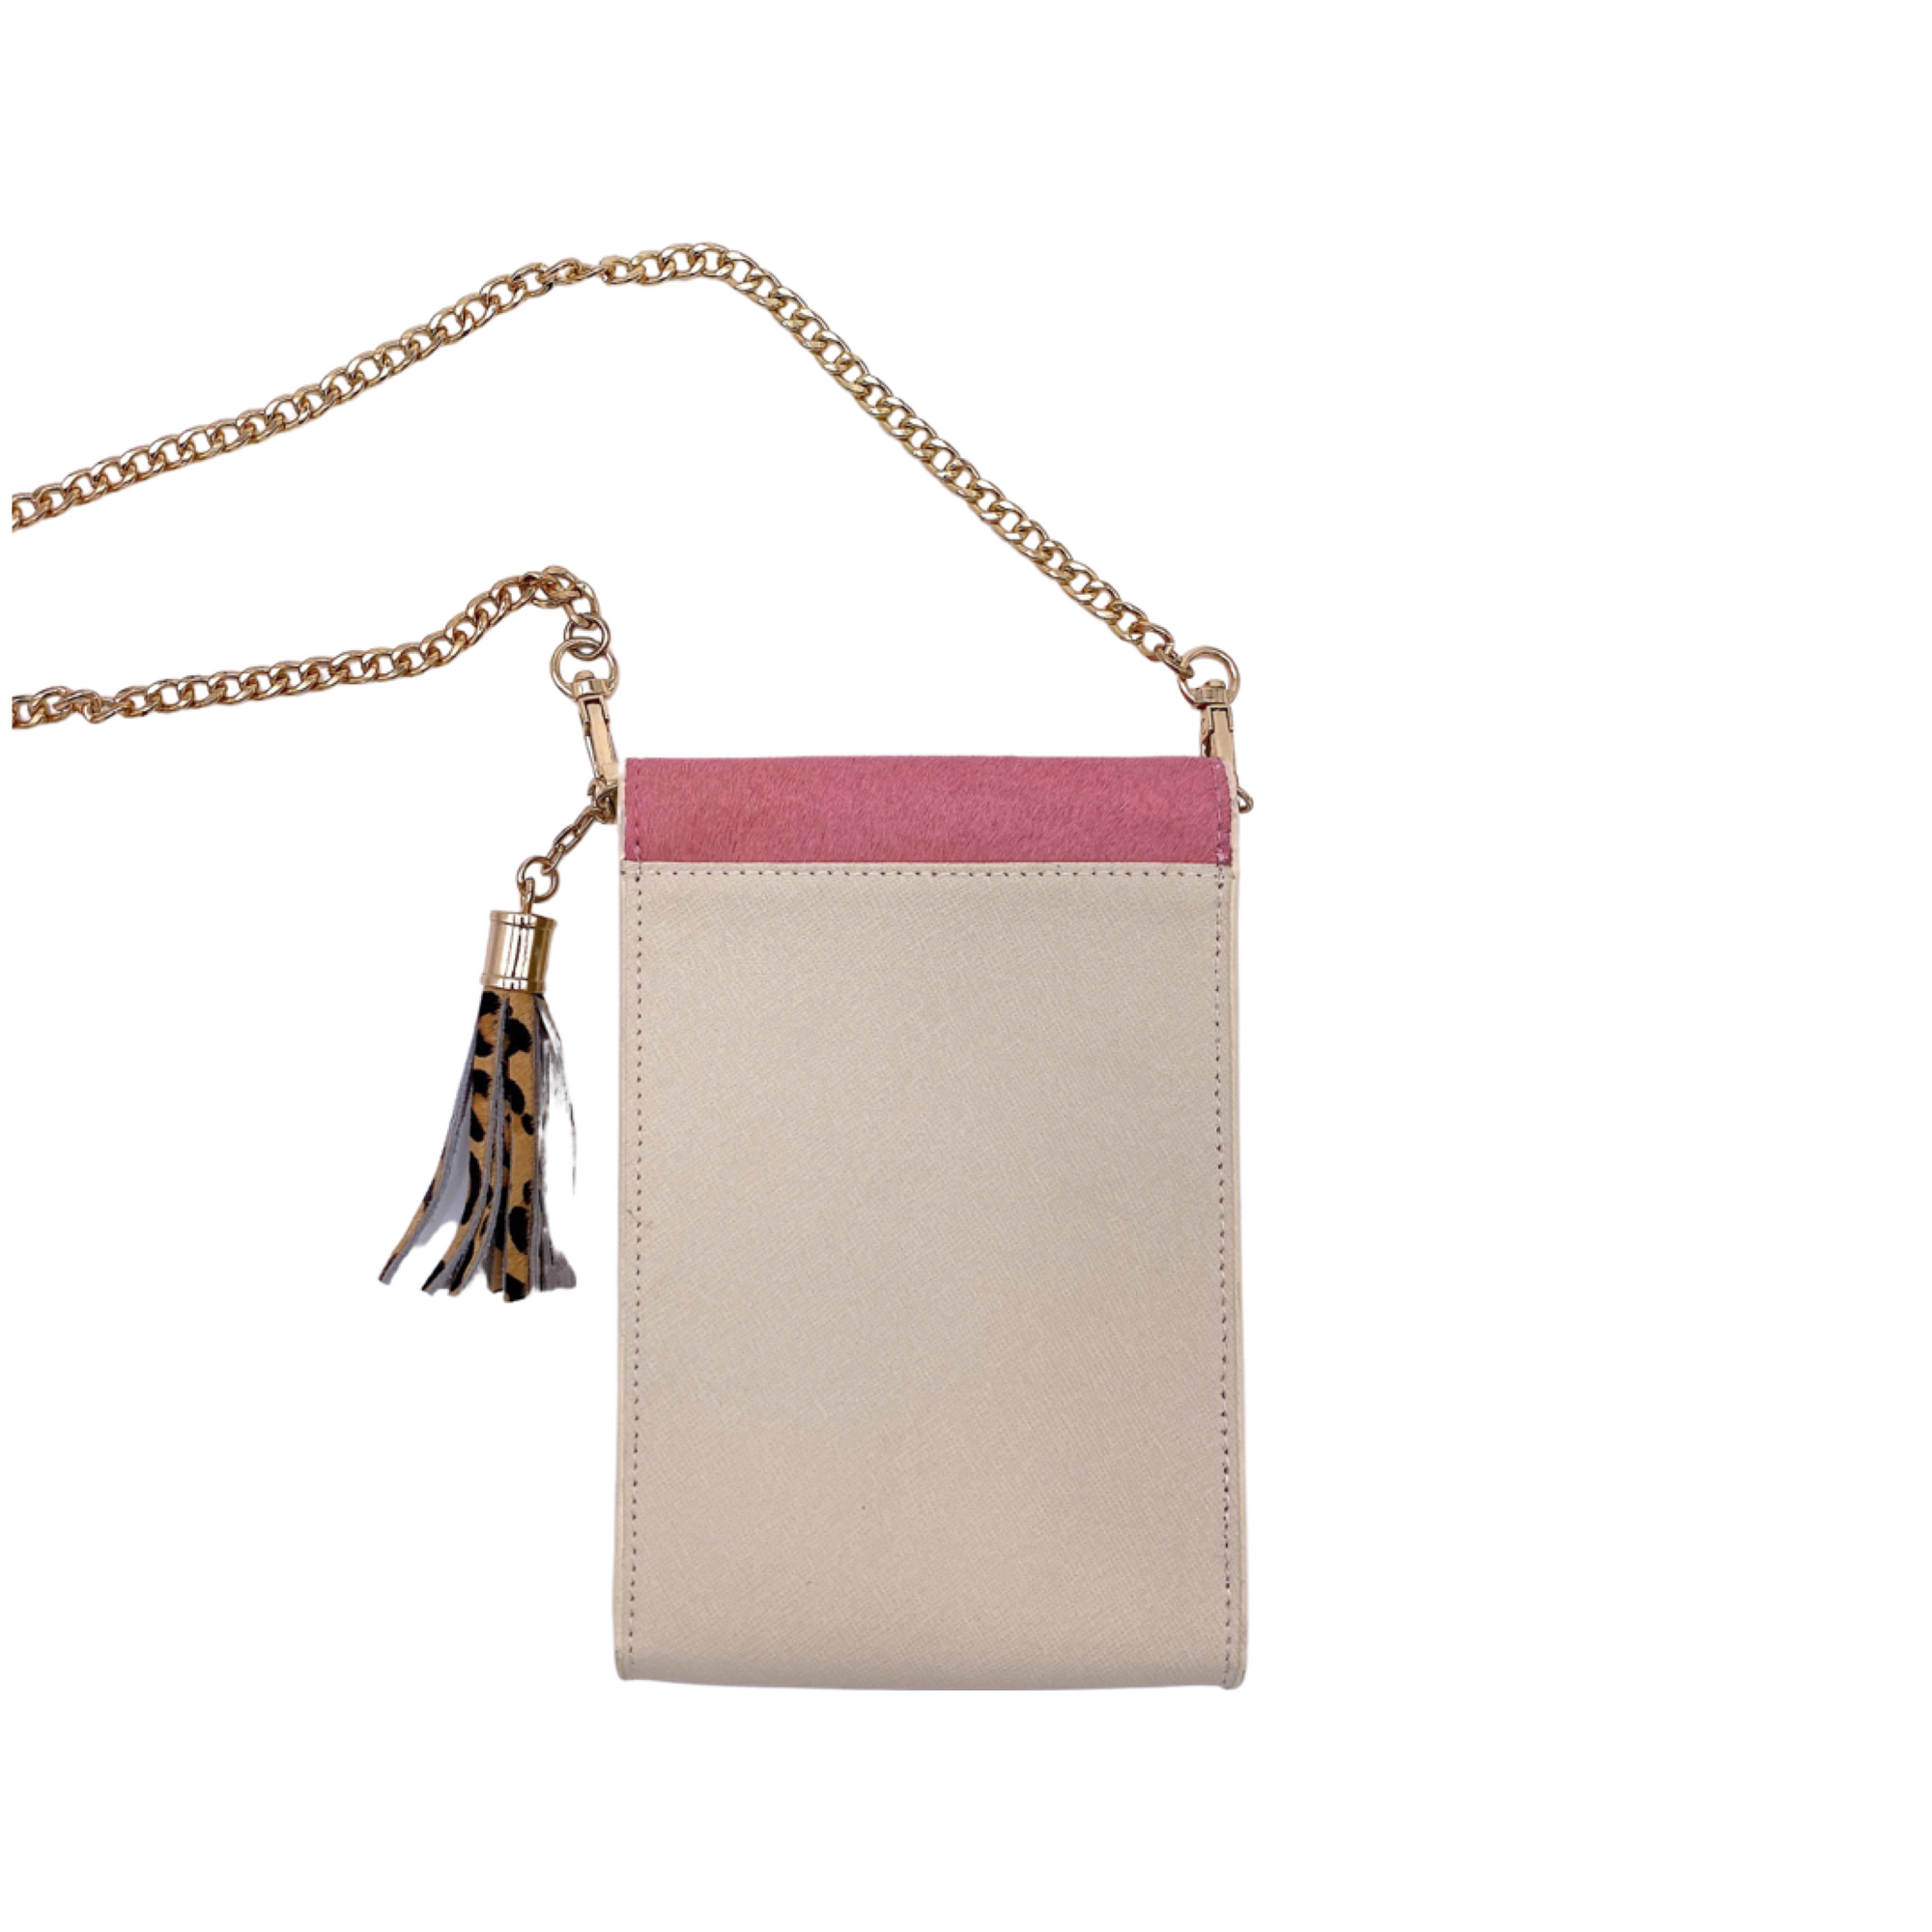 Go-Go Phone Crossbody Bag in Pink/Ivory